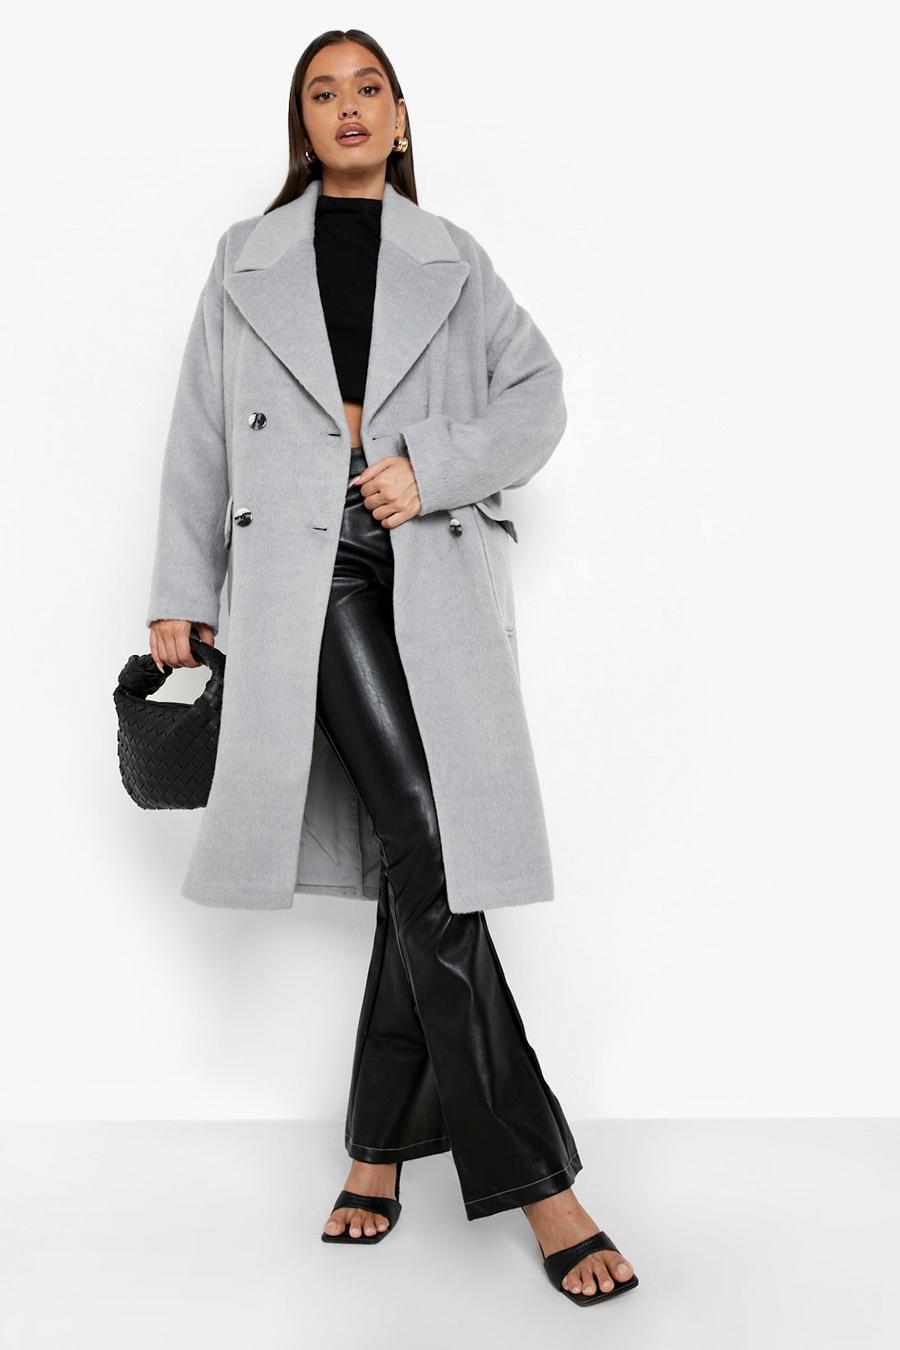 boohoo Short Belted Textured Wool Look Coat - Grey - Size 12